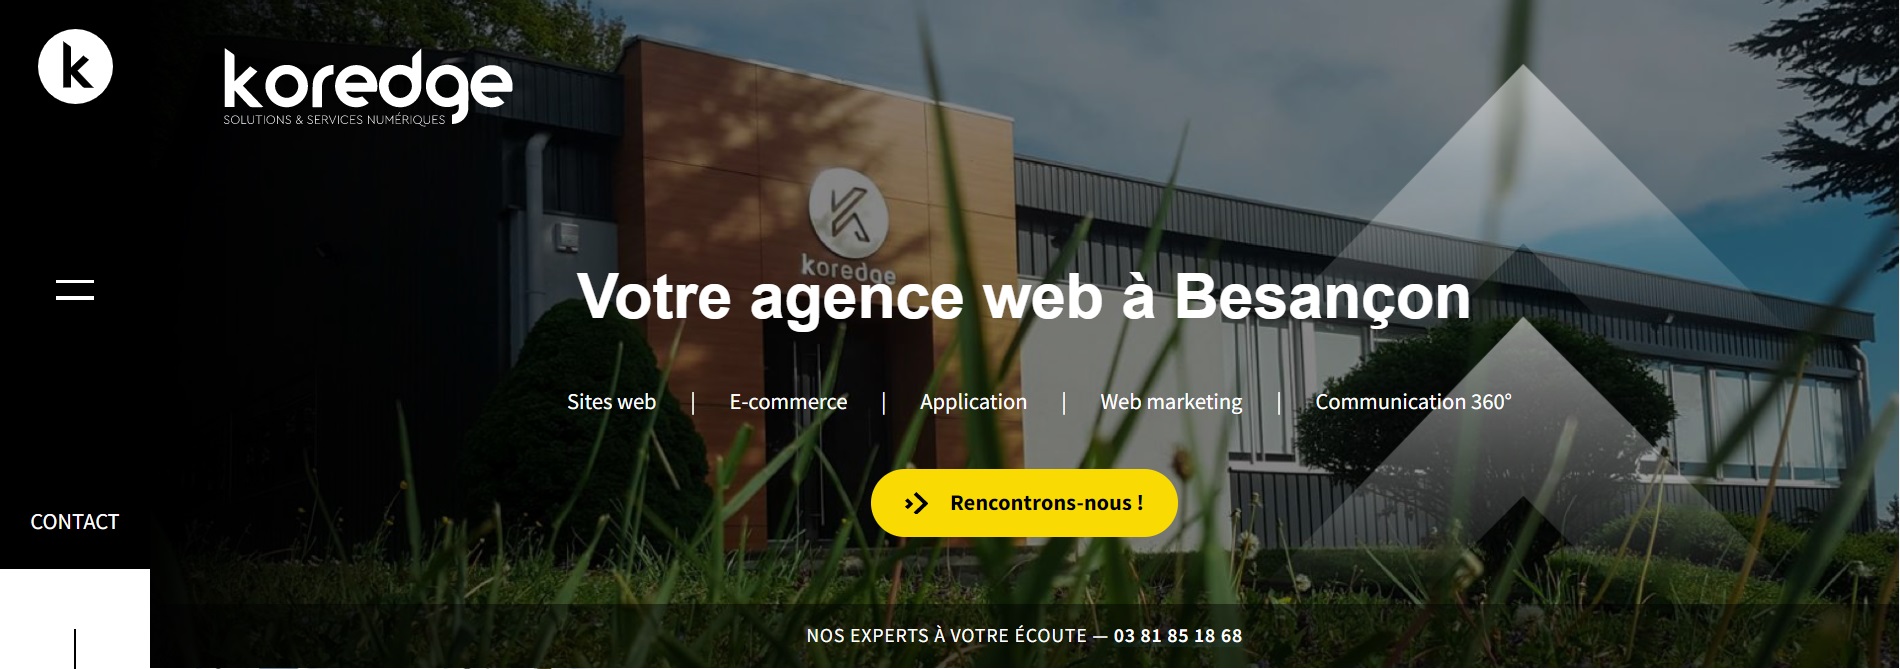  Koredge, Agence web & digitale à Besançon - Agence Web à Besançon